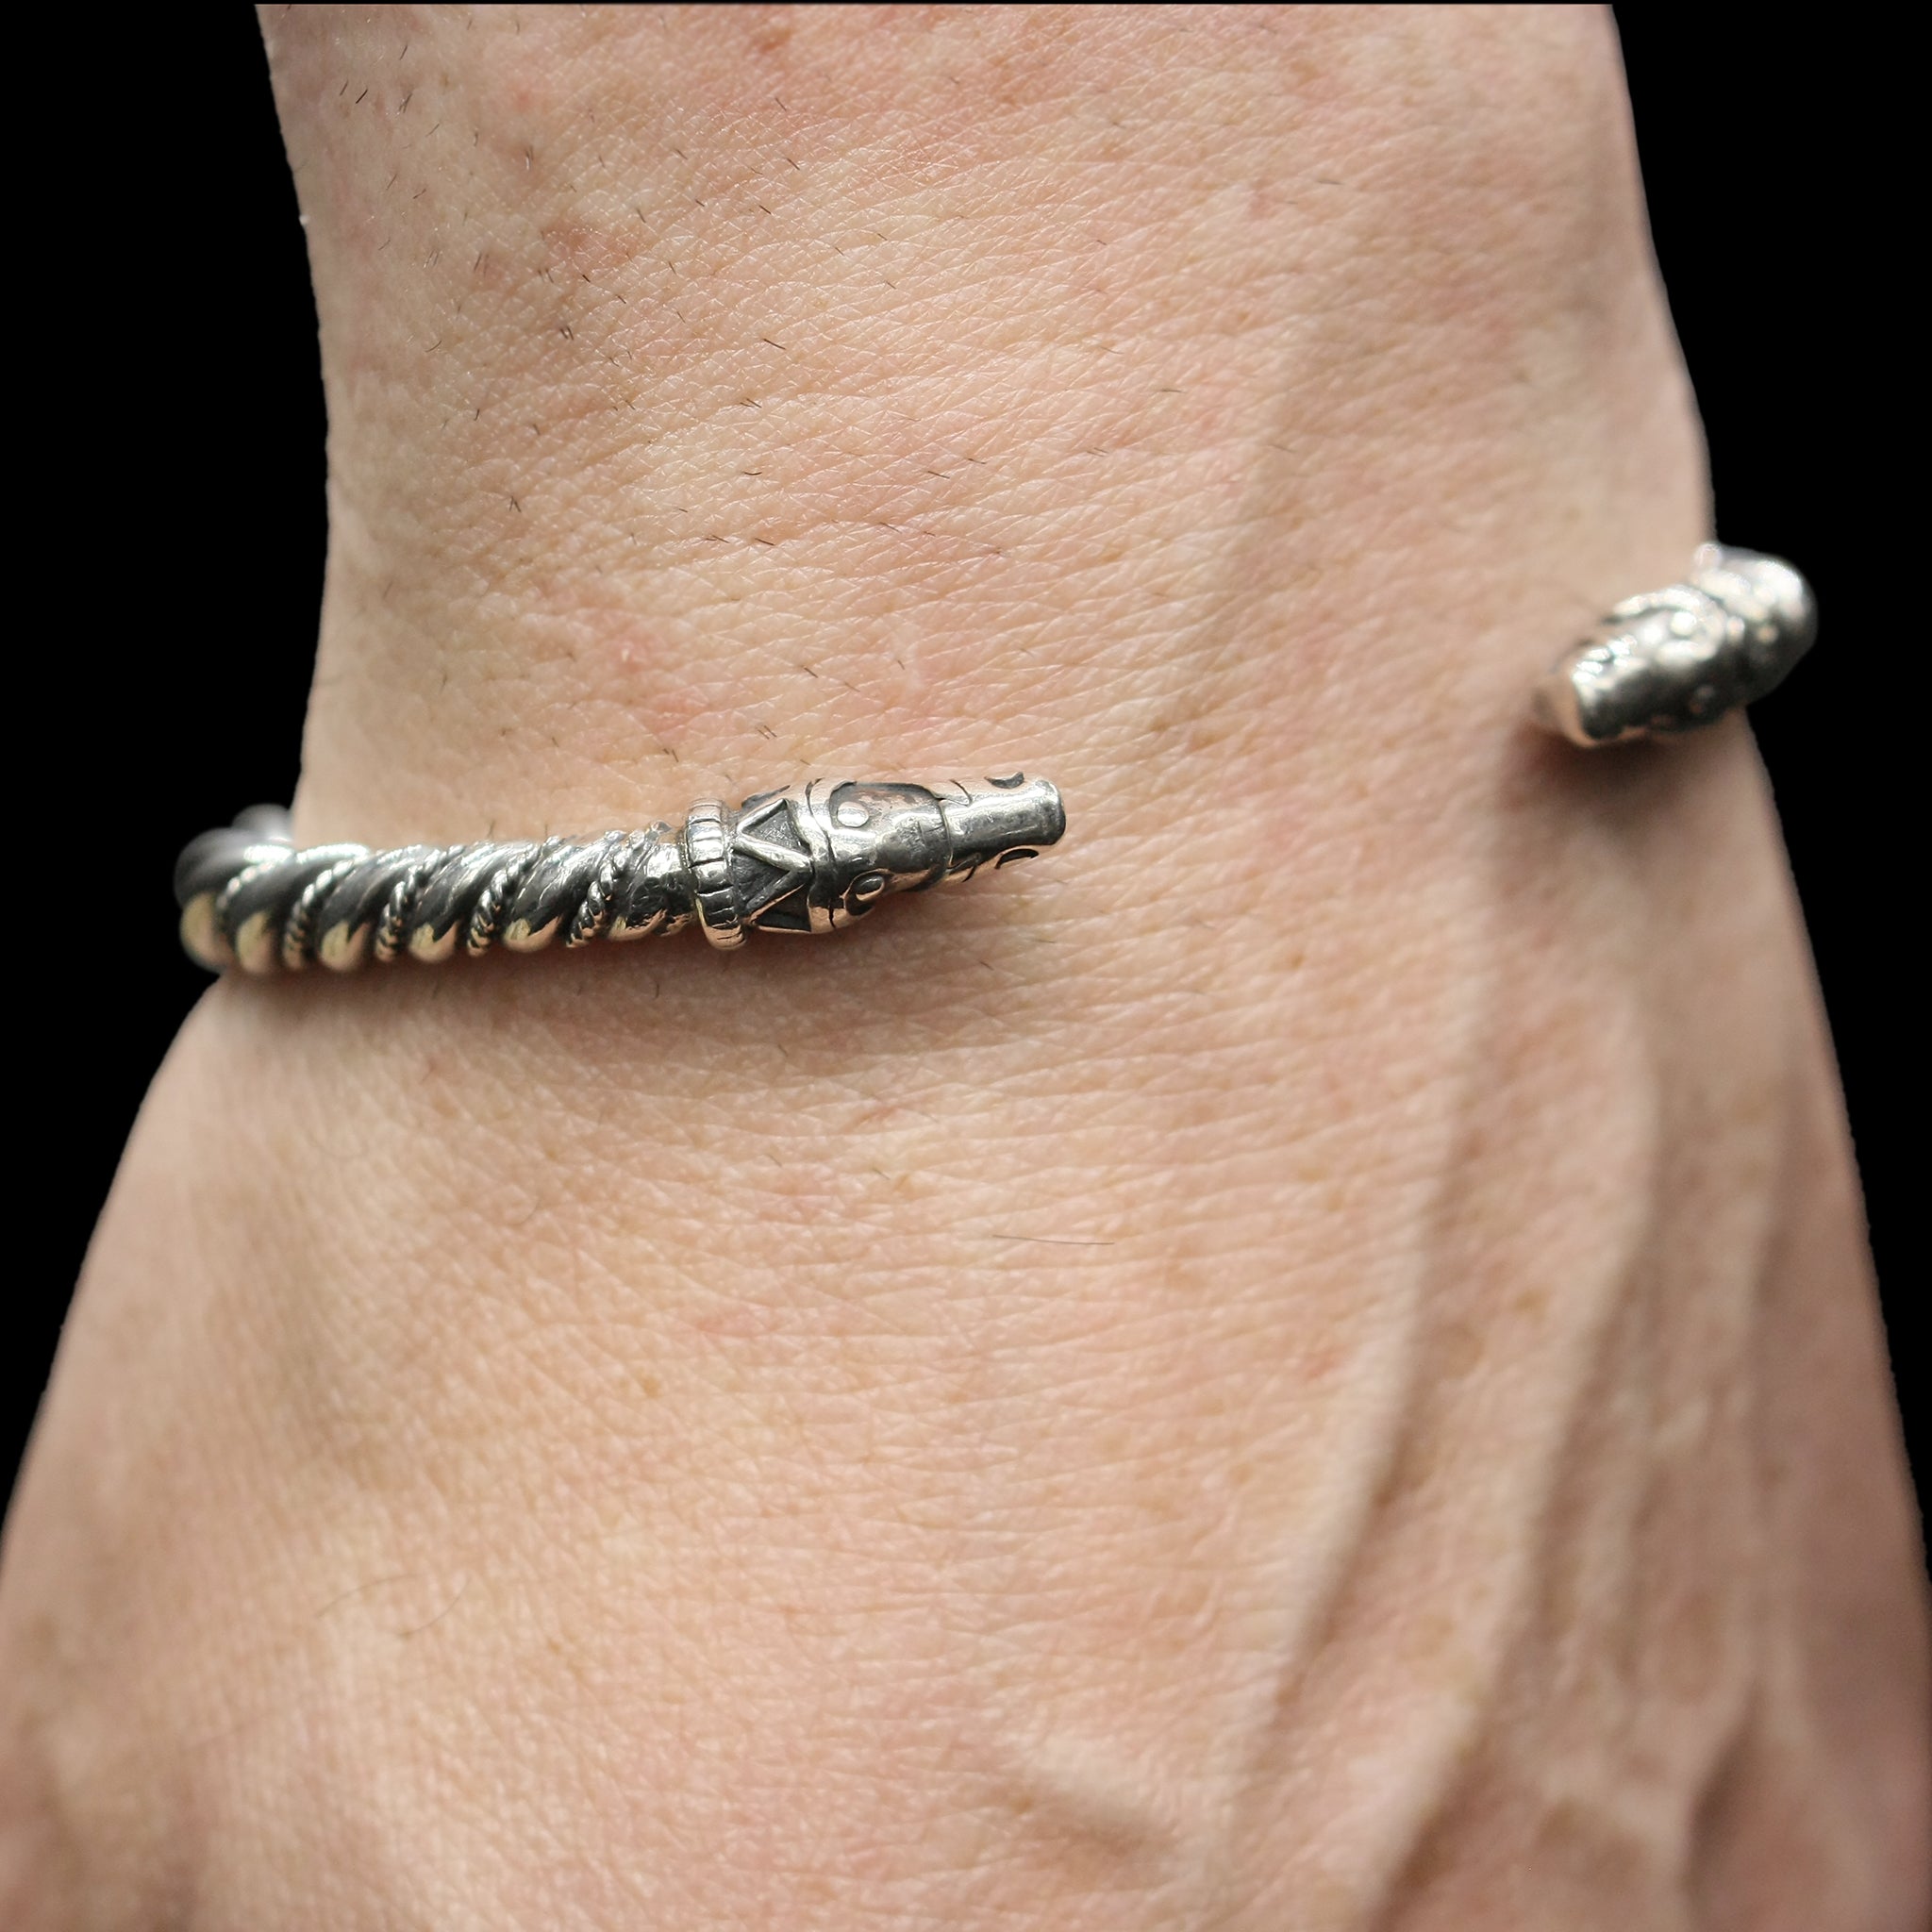 Medium Twisted Silver Bracelet With Gotlandic Dragon Heads On Wrist